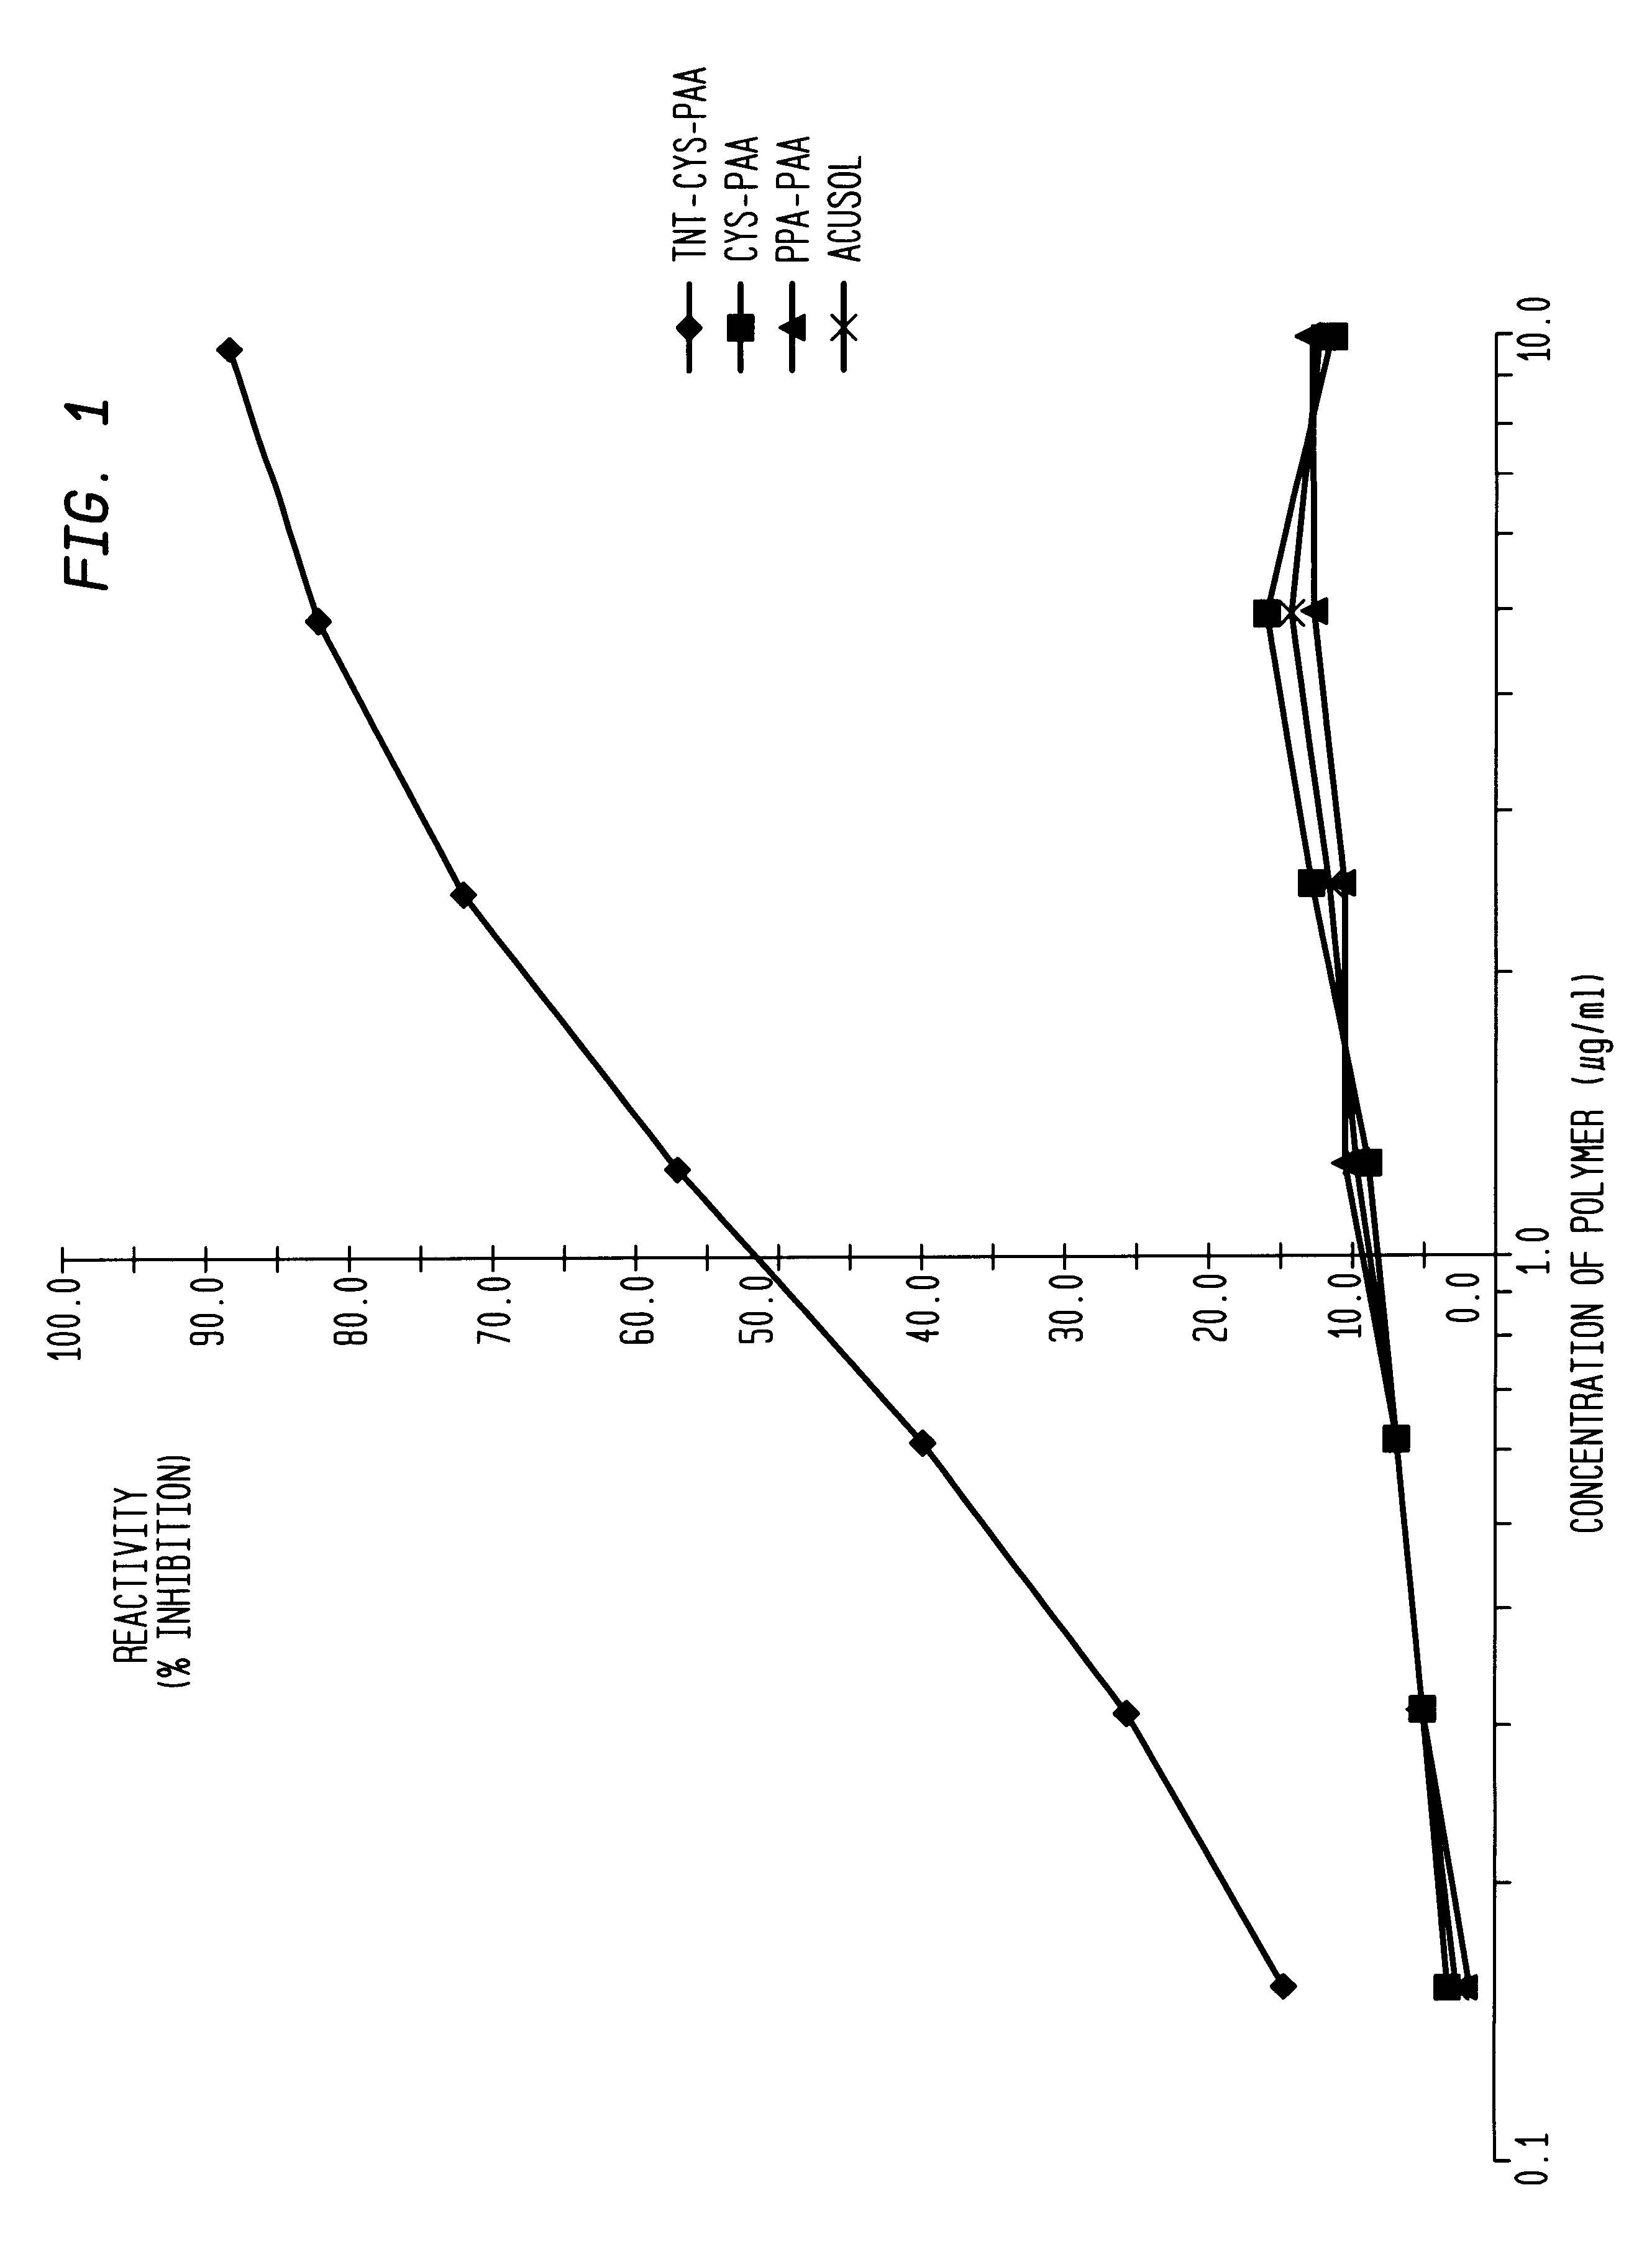 Method for identifying and quantifying polymers utilizing immunoassay techniques